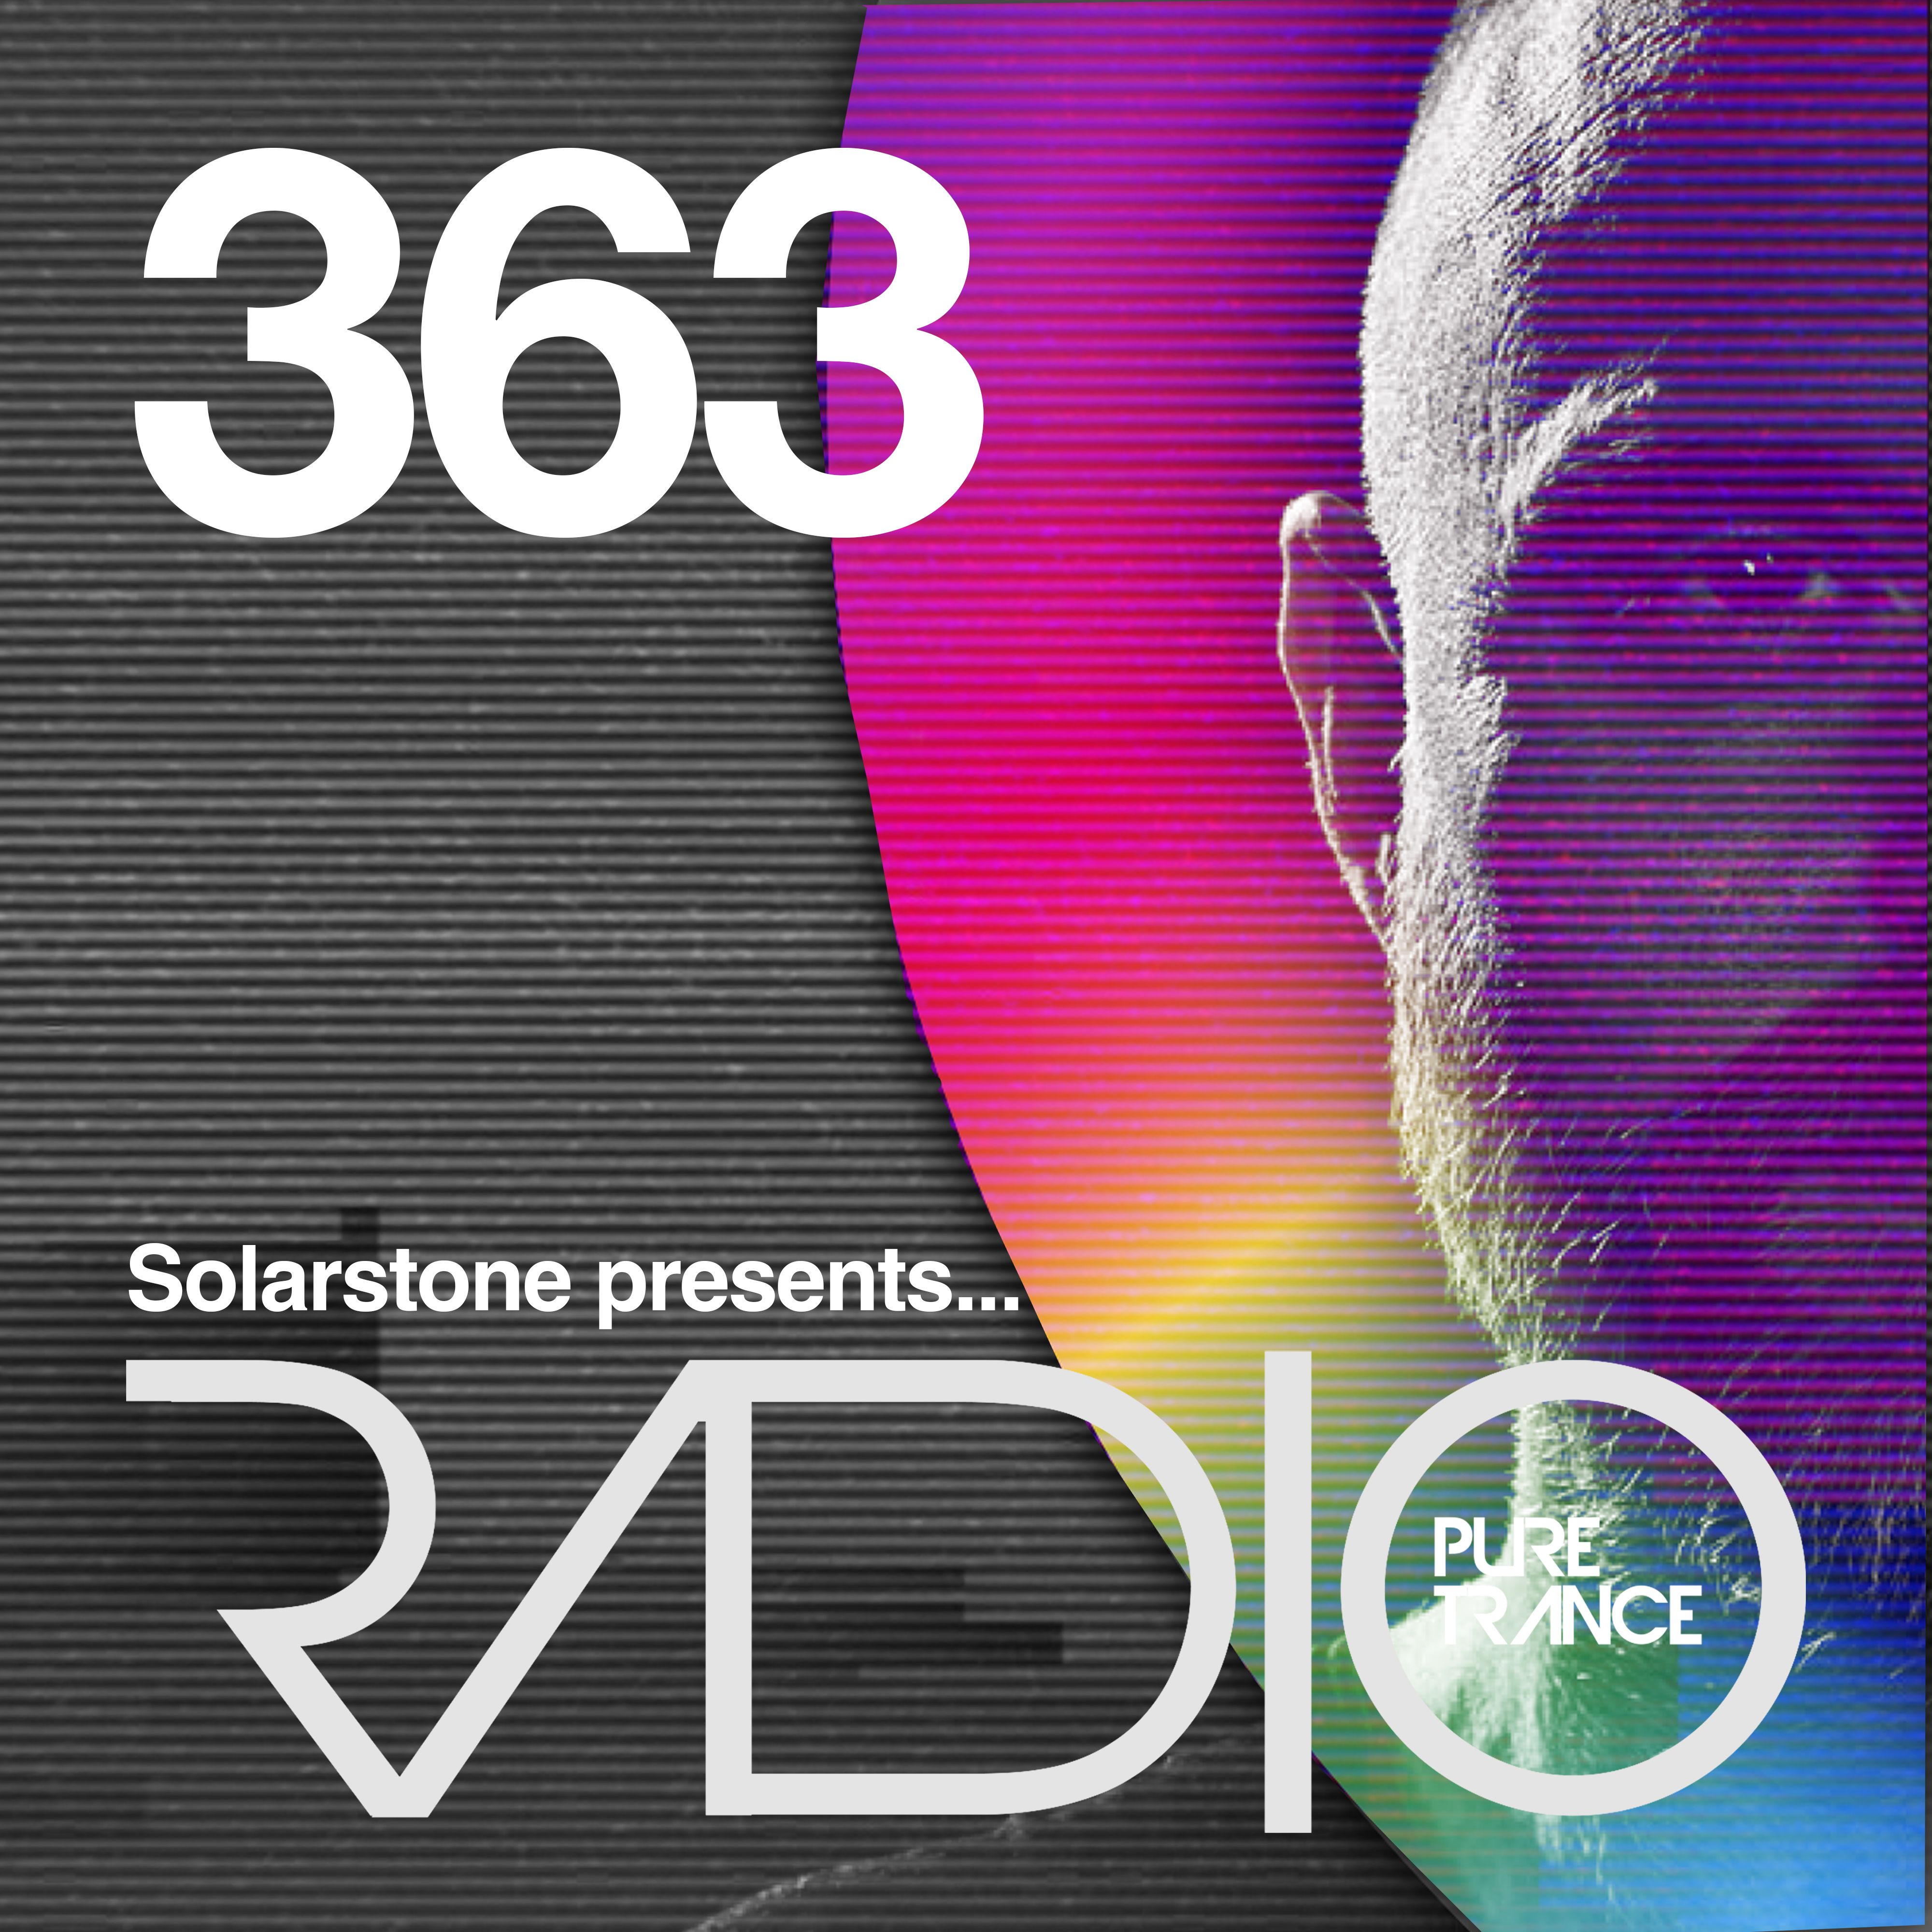 Solarstone presents Pure Trance Radio Episode 363